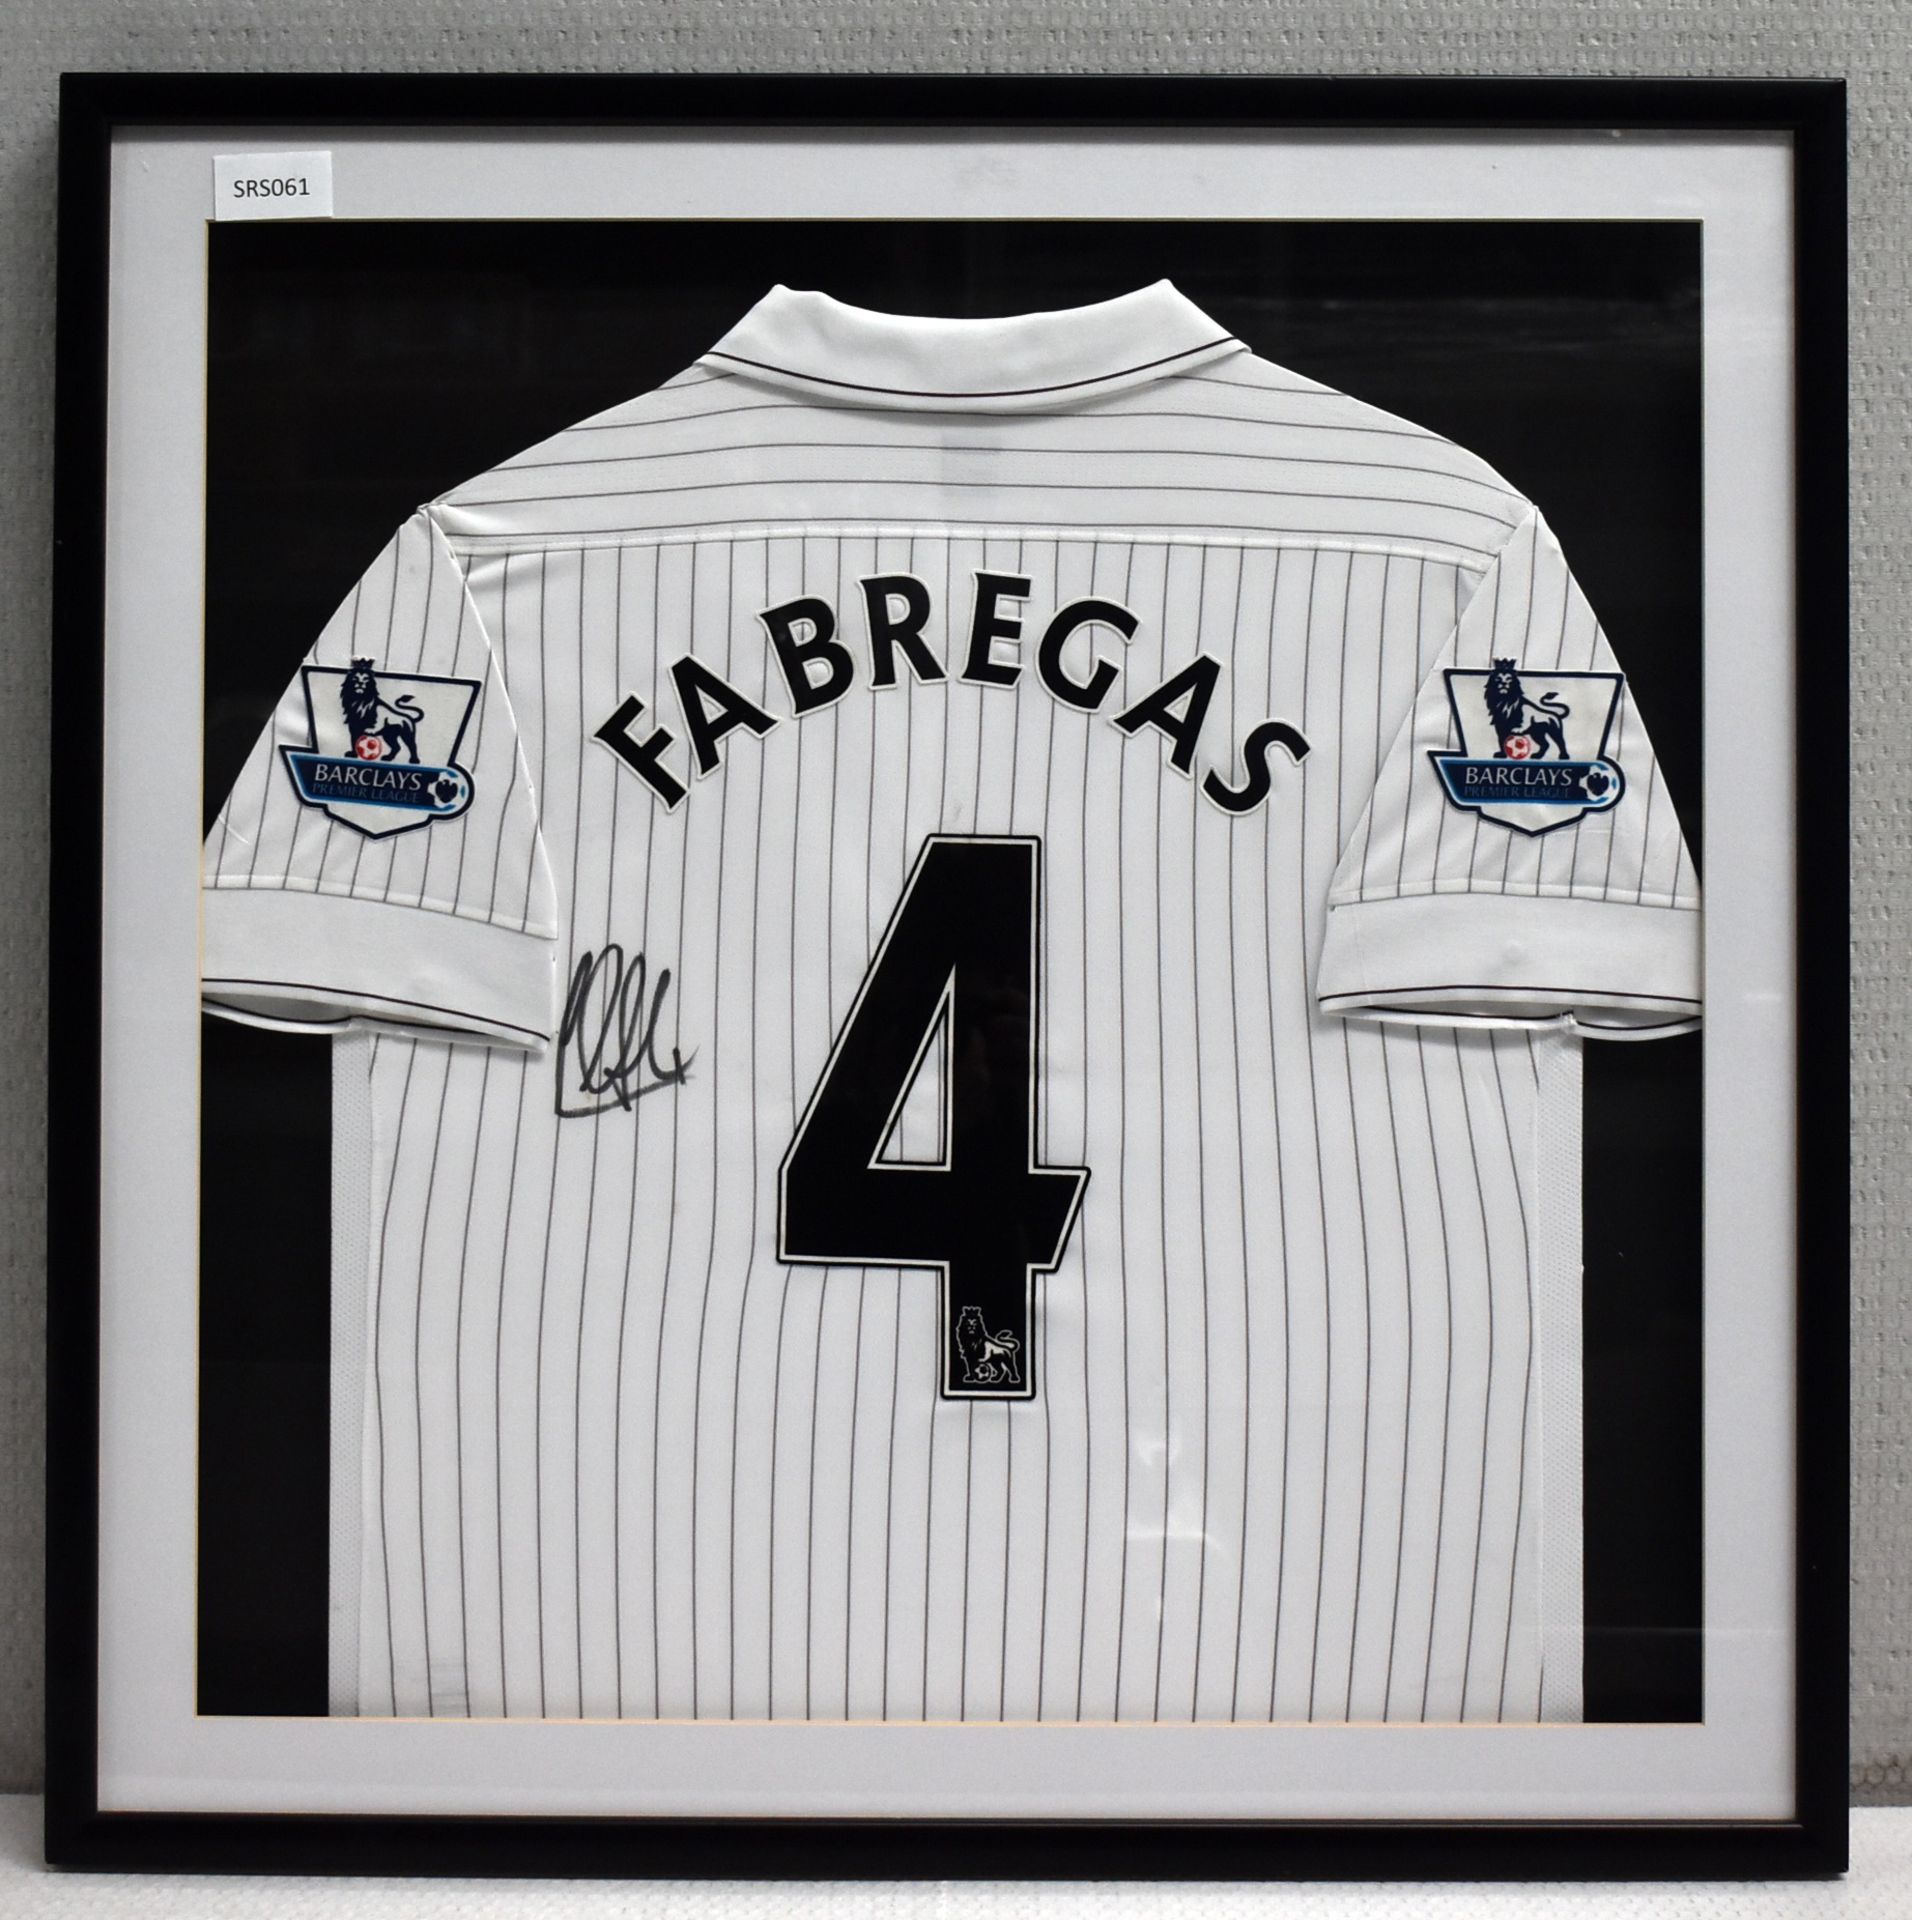 1 x Autographed ARSENAL Football Shirt, Signed By CESC FABREGAS - Circa 2009-2010